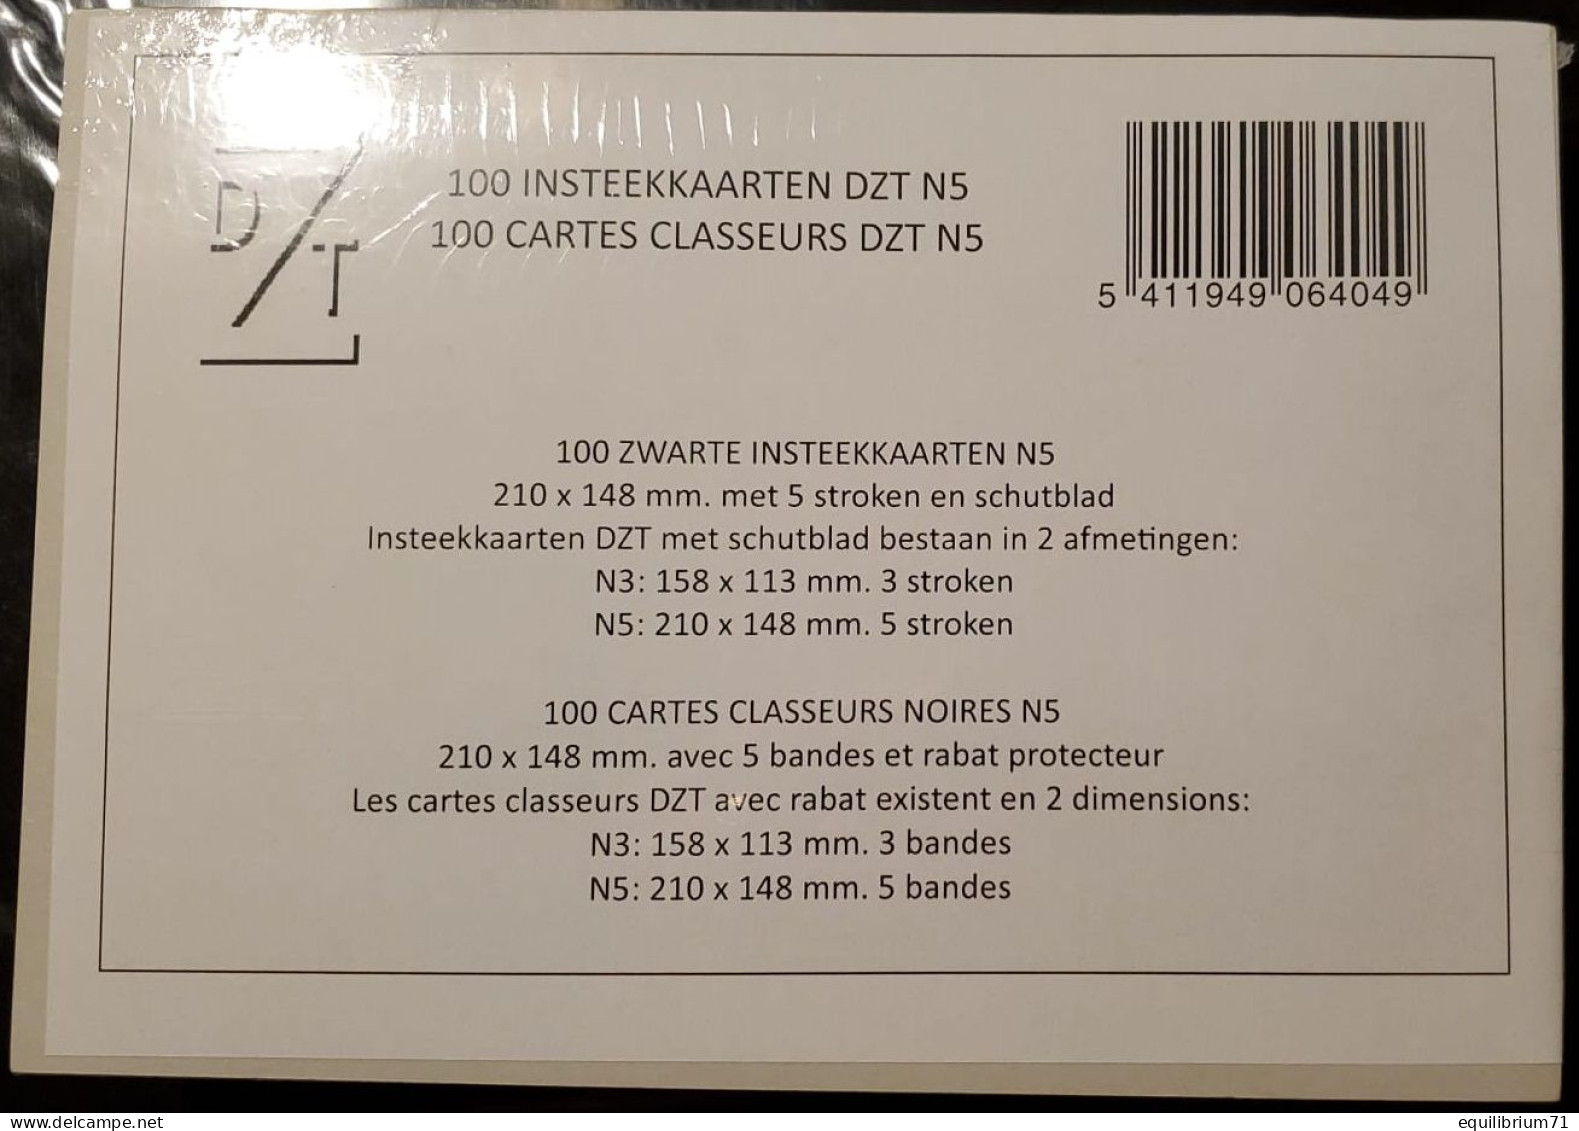 100 Cartes Classeurs / Insteekkaarten / Karten Einlegen / Insert Cards - DZT N5 - Cartes De Stockage